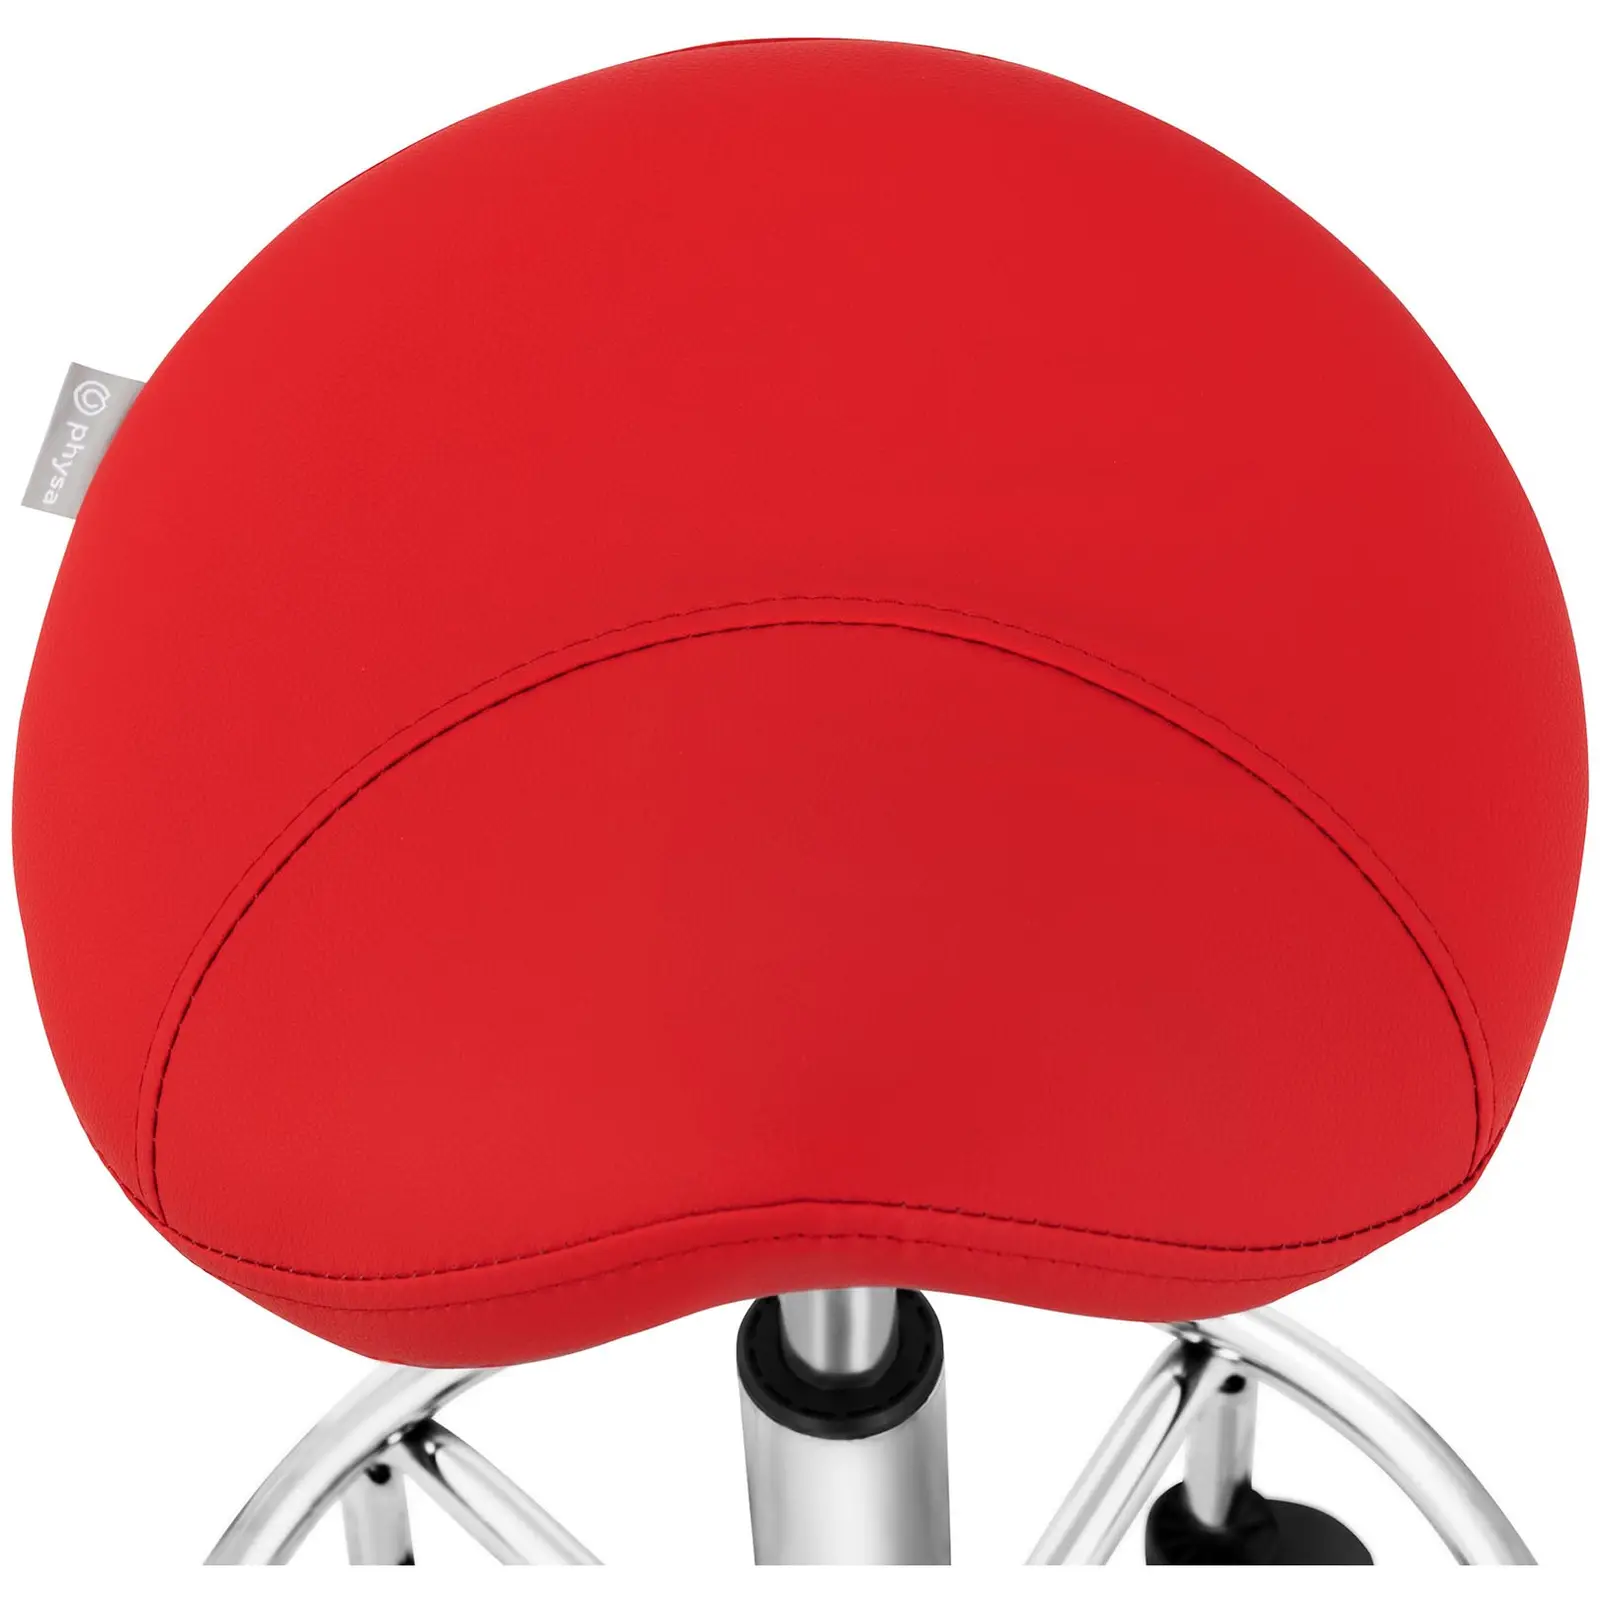 Sedlasti stol - 570 - 690 mm - 150 kg - rdeč